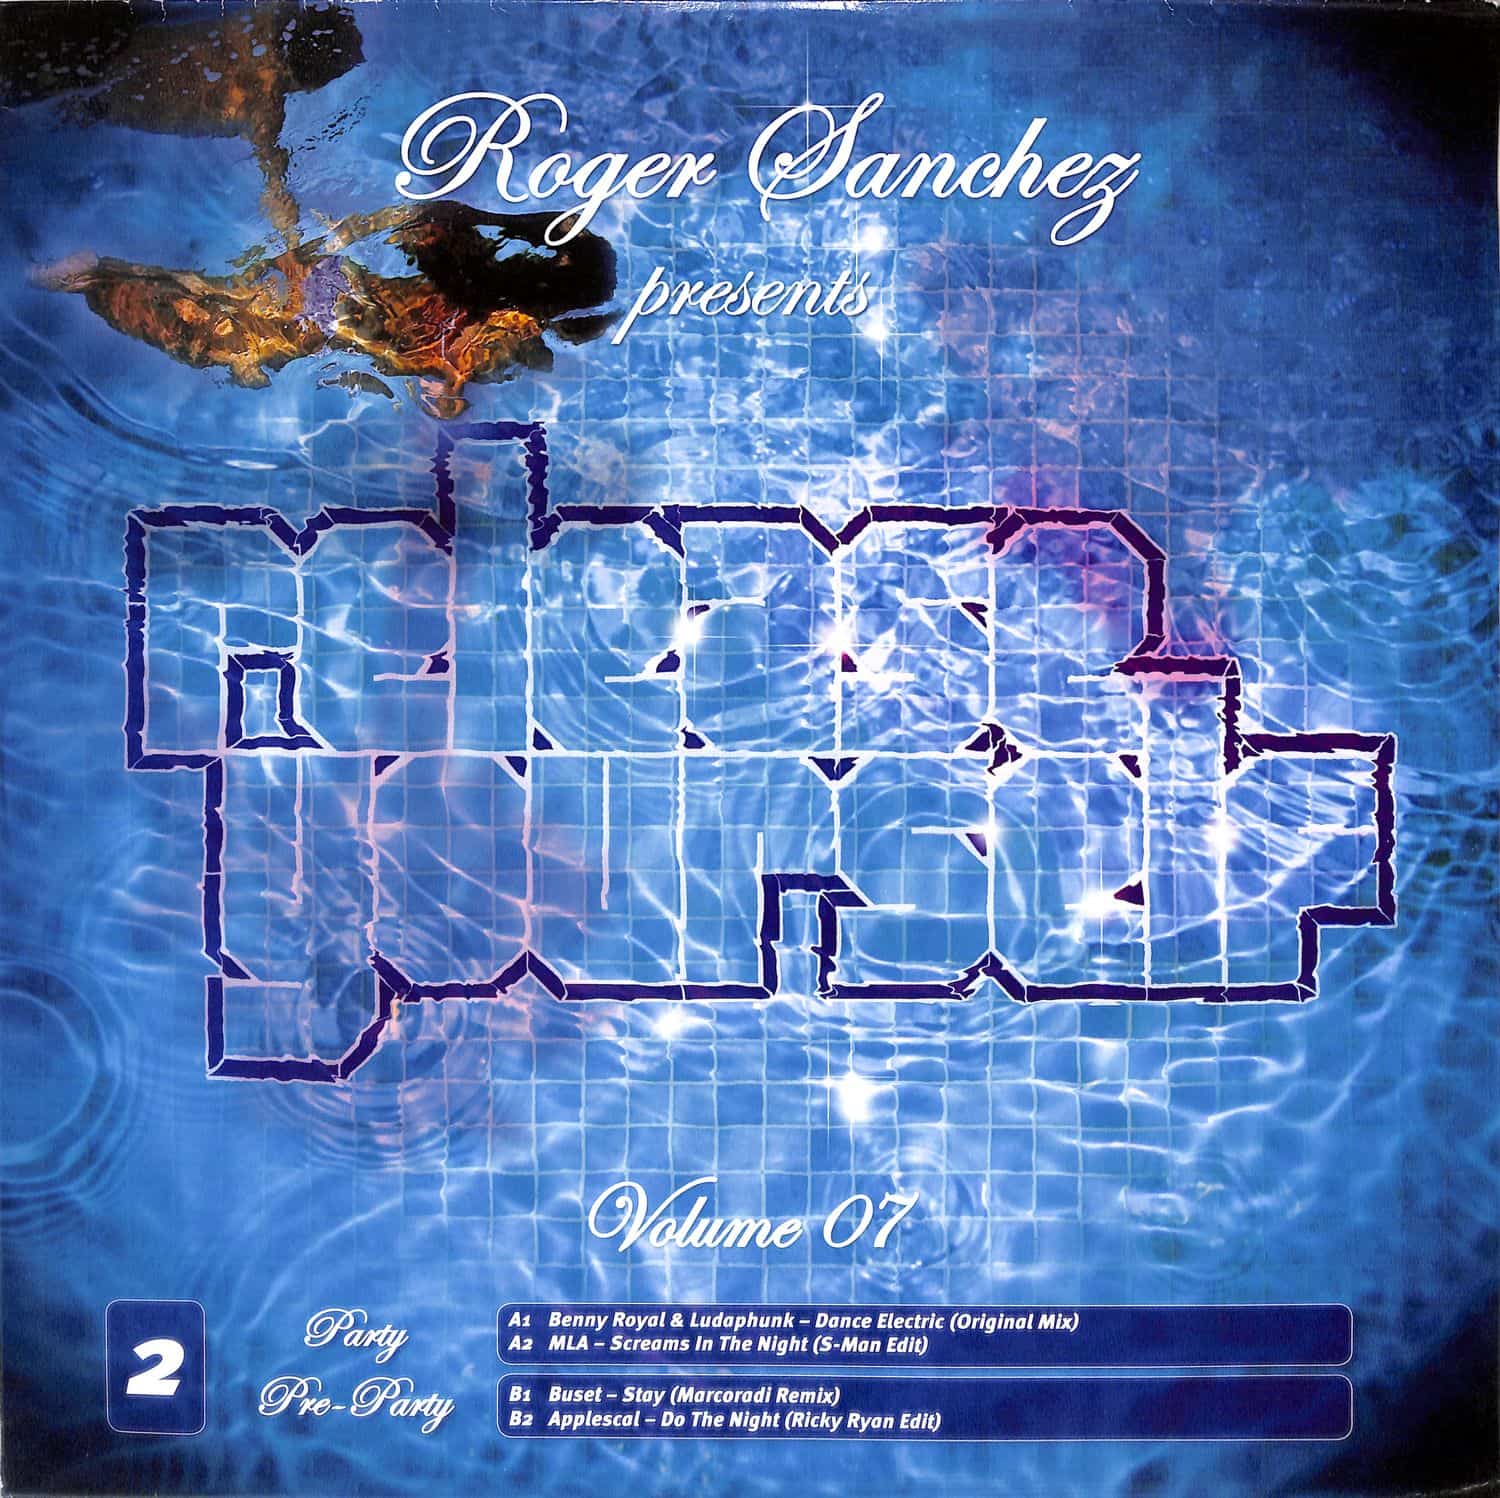 Roger Sanchez - RELEASE YOURSELF - VOL. 7 EP2